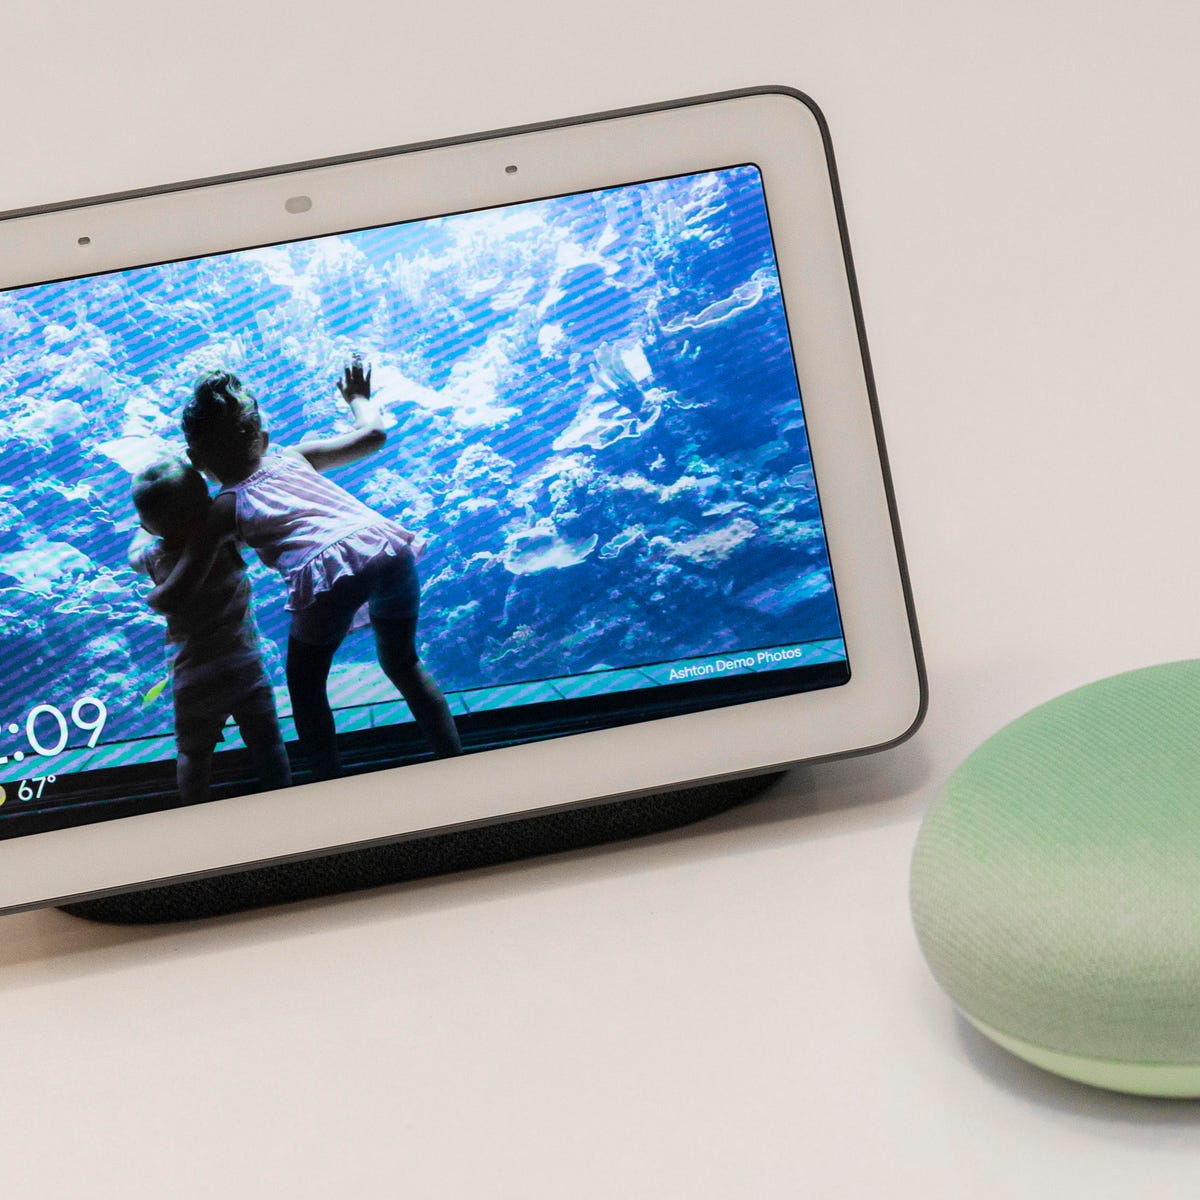 ecobee's HomeKit SmartThermostat includes a bundled temperature sensor at  $180 (Save $40)